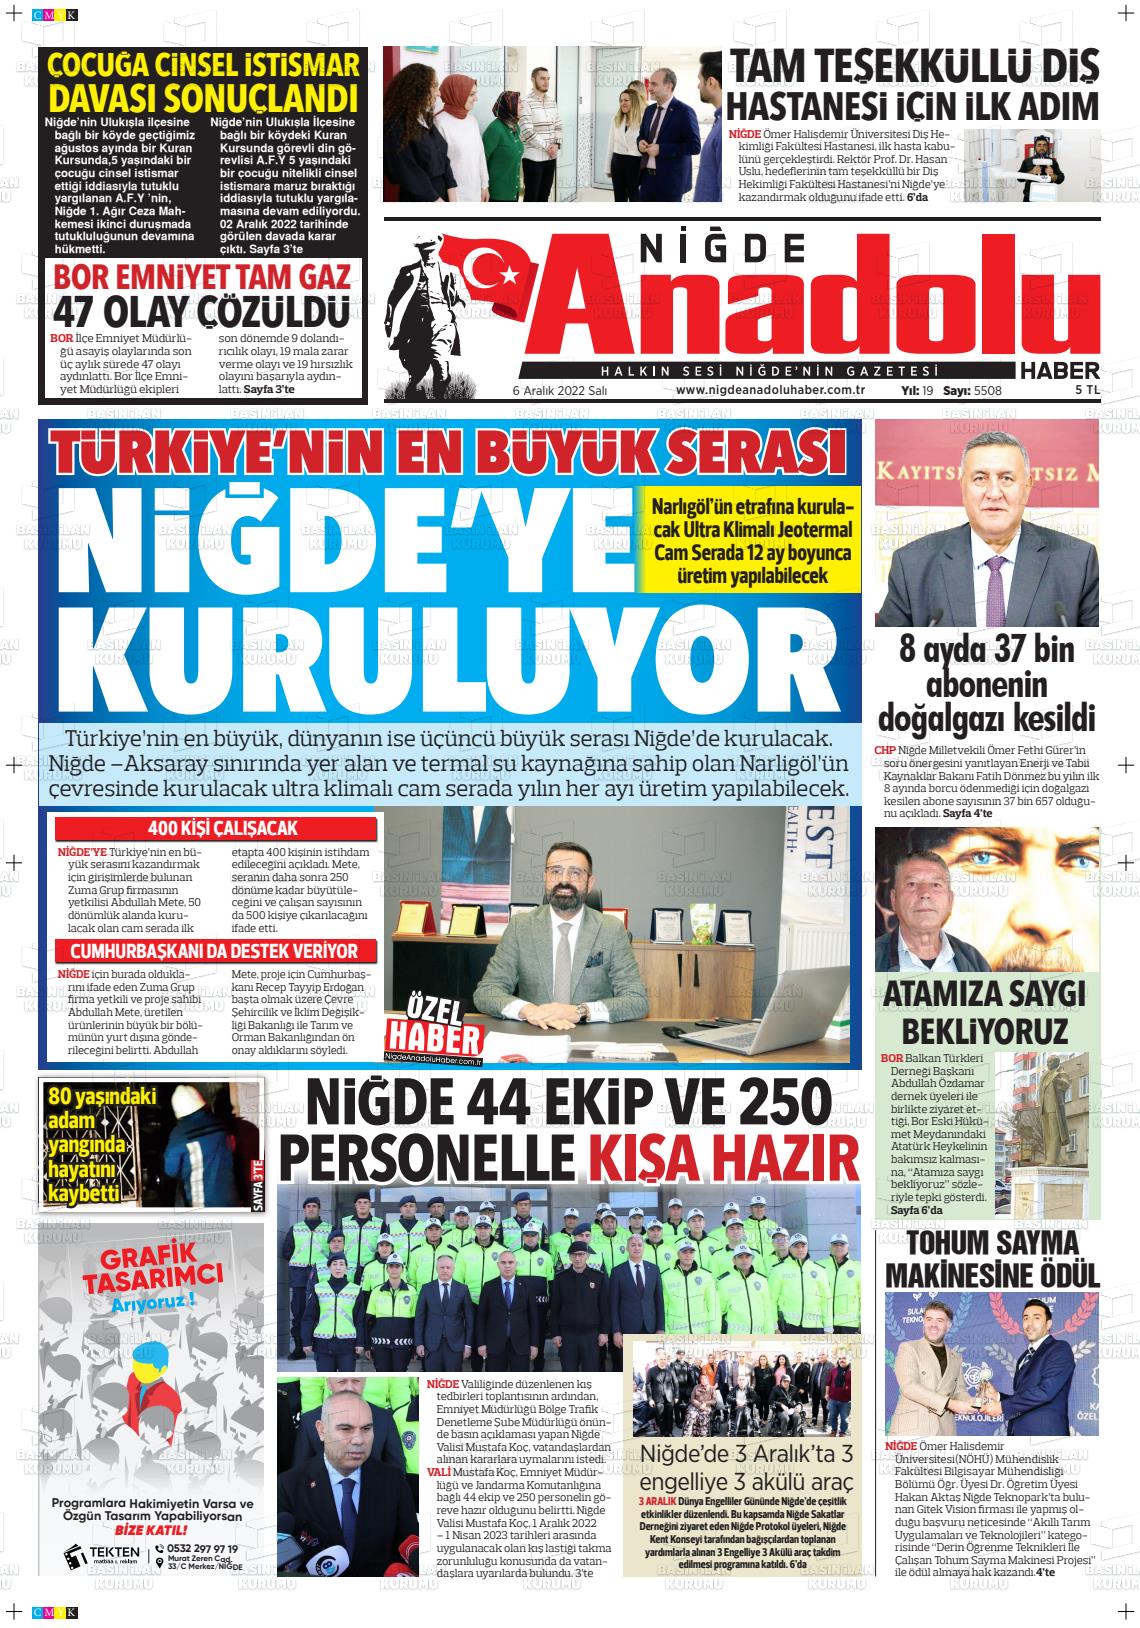 06 Aralık 2022 Niğde Anadolu Haber Gazete Manşeti